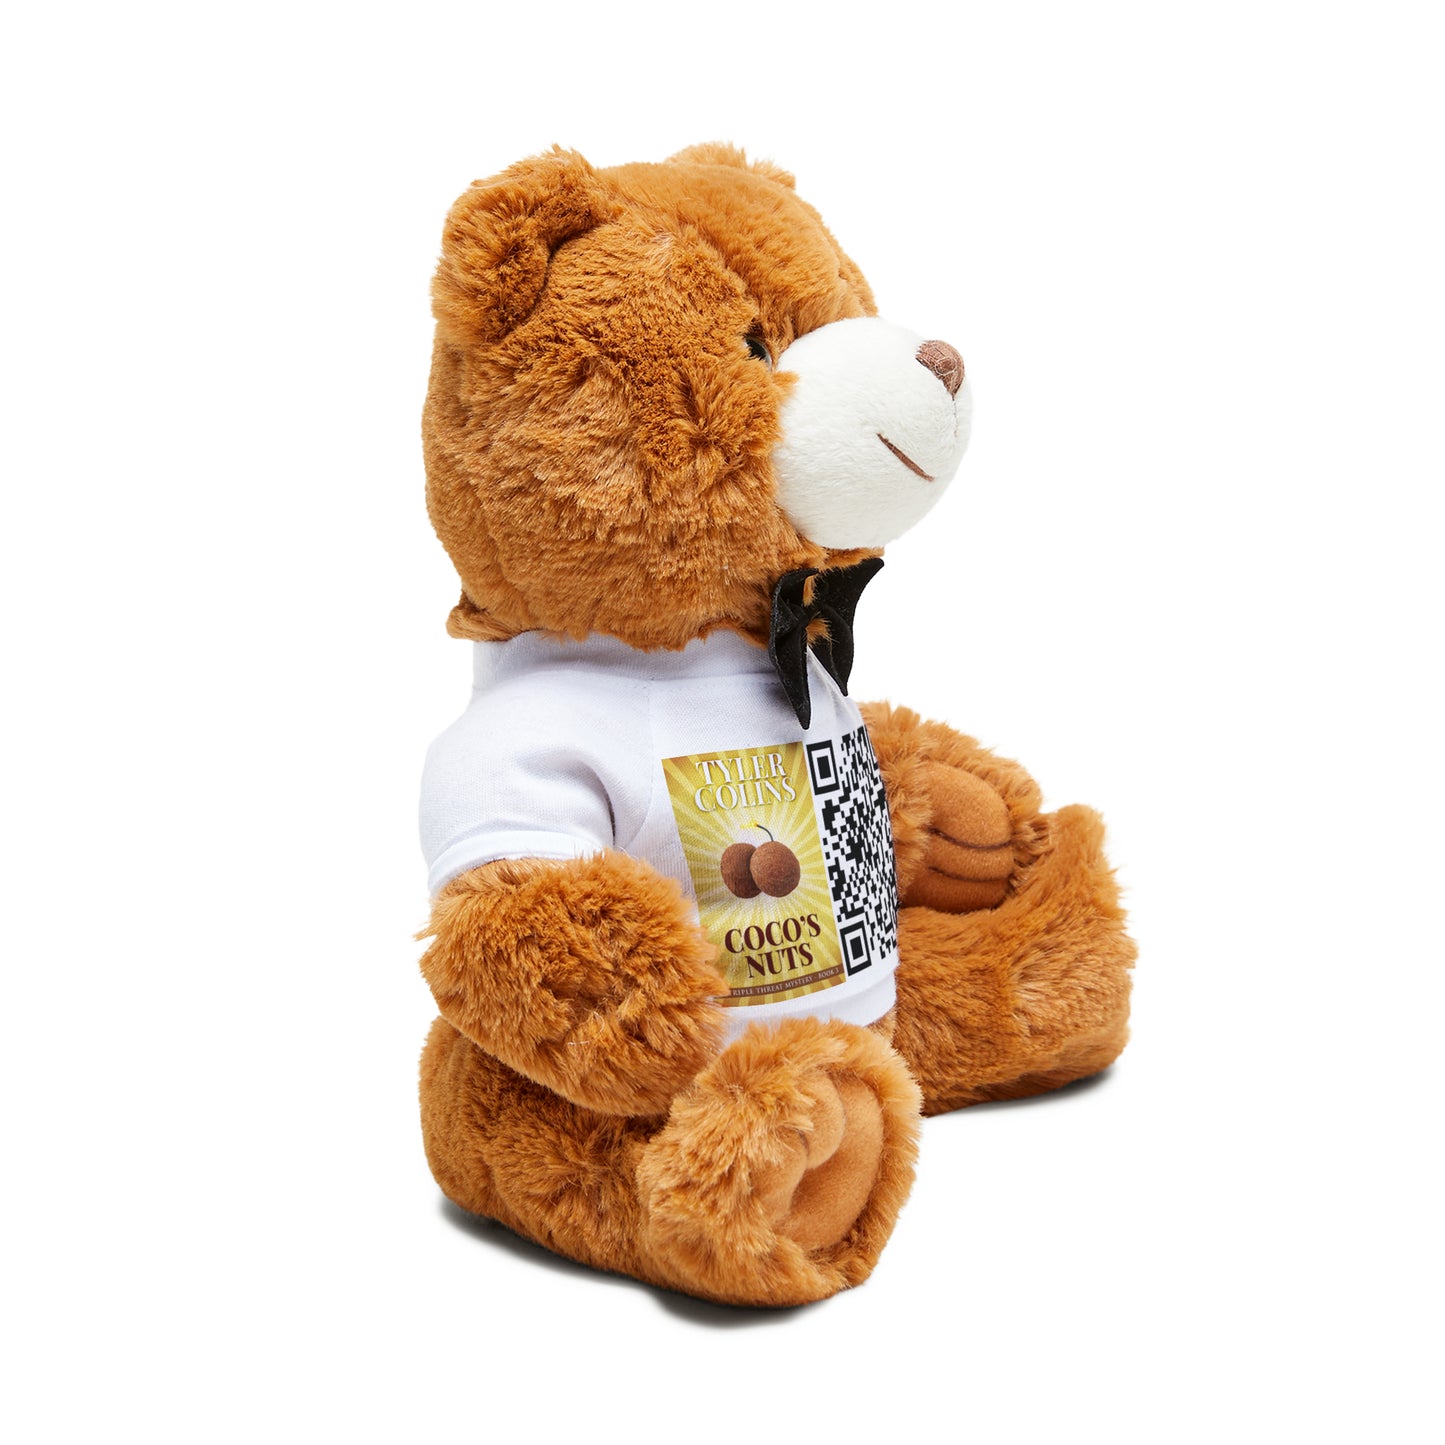 Coco's Nuts - Teddy Bear